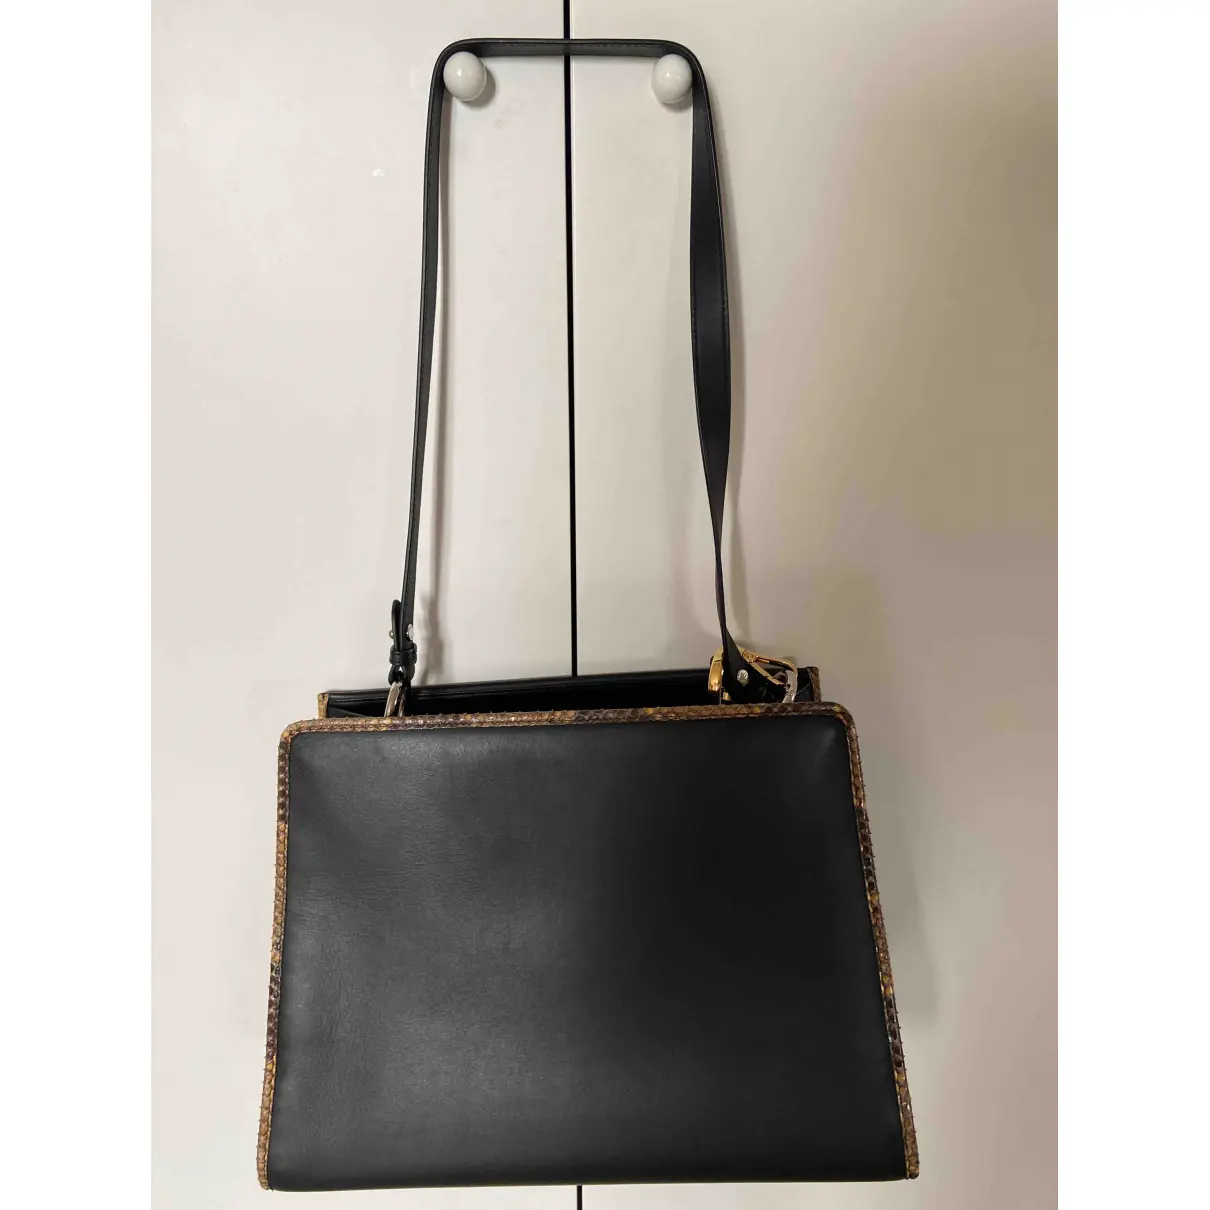 Buy Fendi Runaway exotic leathers handbag online